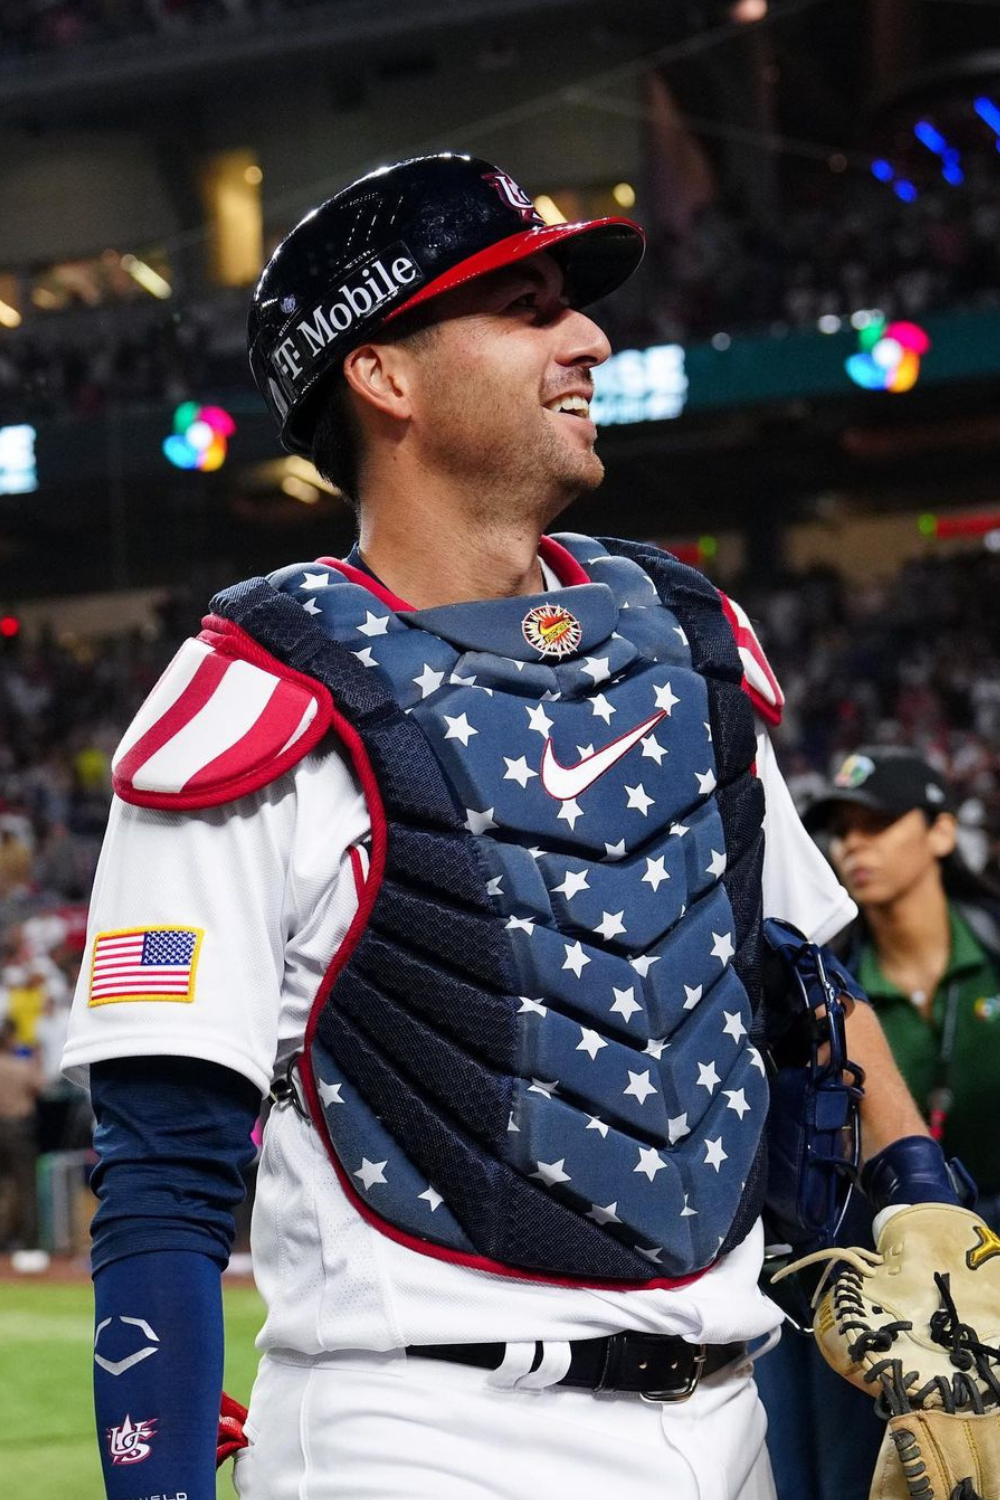 Kyle Higashioka, A Professional Baseball Catcher